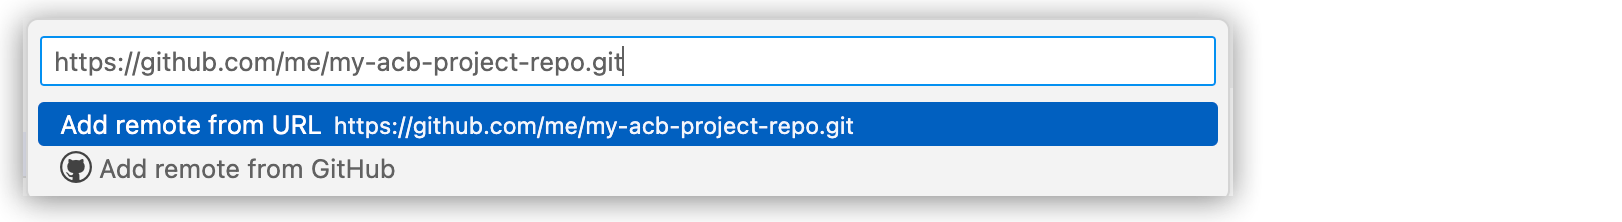 Adding a remote repo URL from GitHub